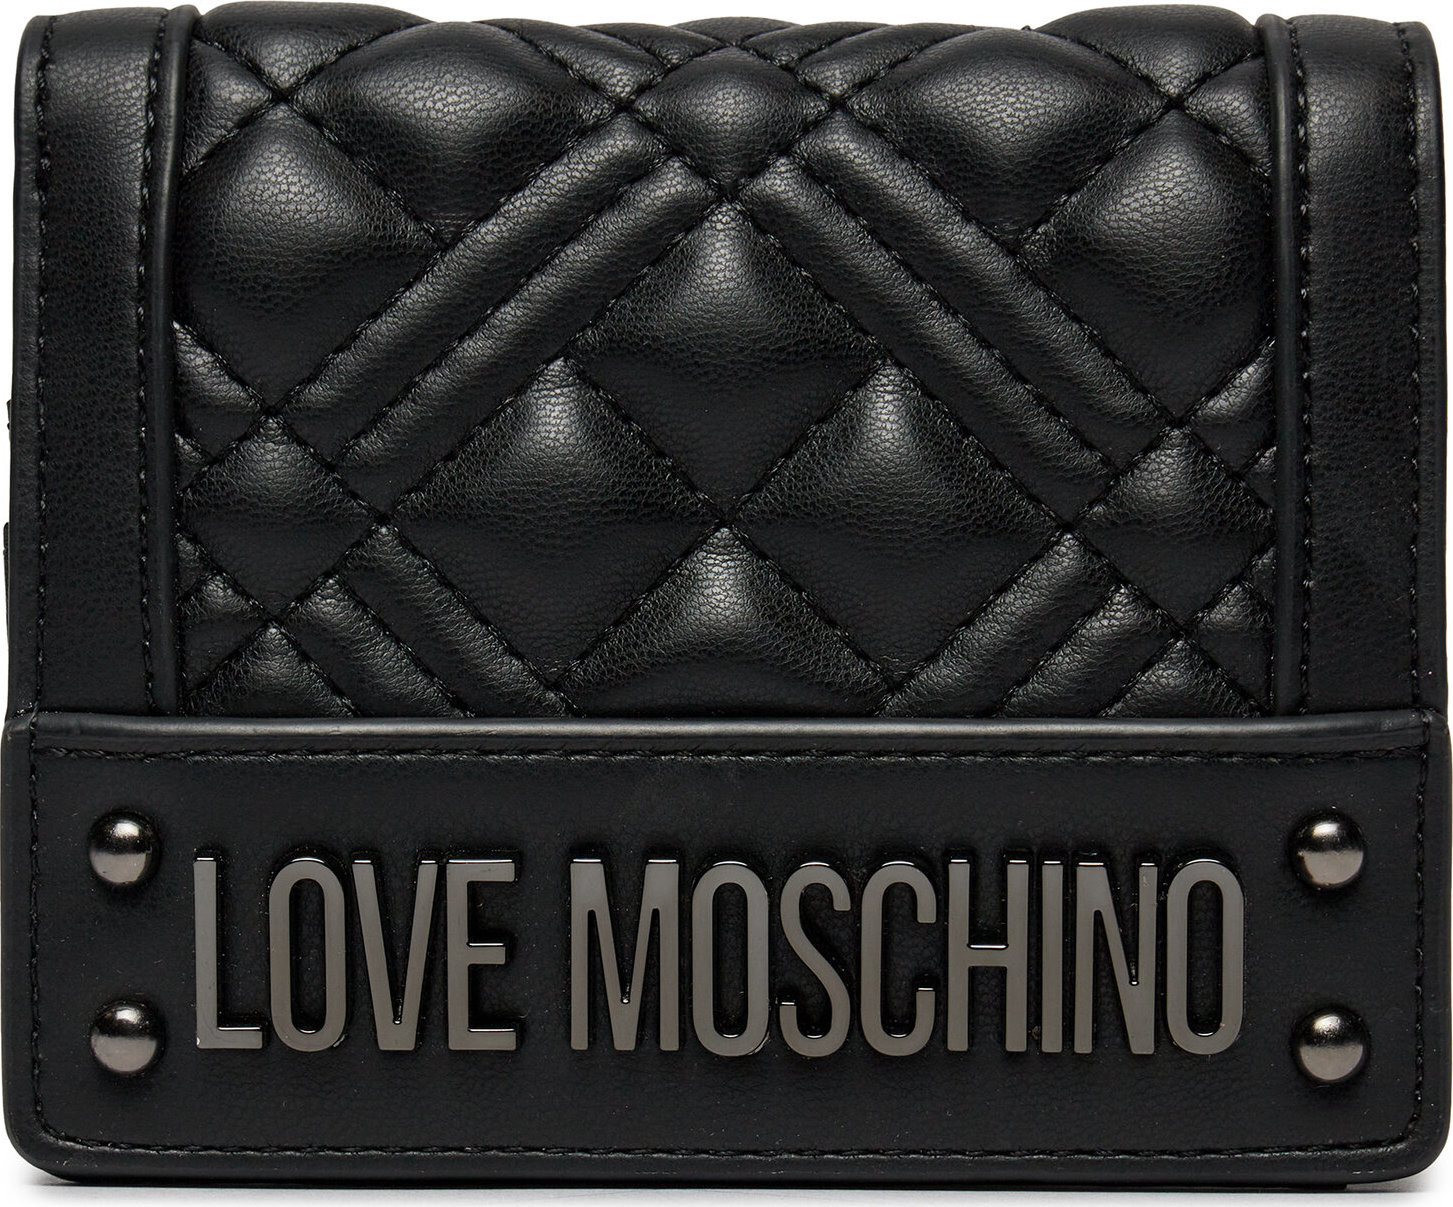 Malá dámská peněženka LOVE MOSCHINO JC5601PP1ILA000A Nero